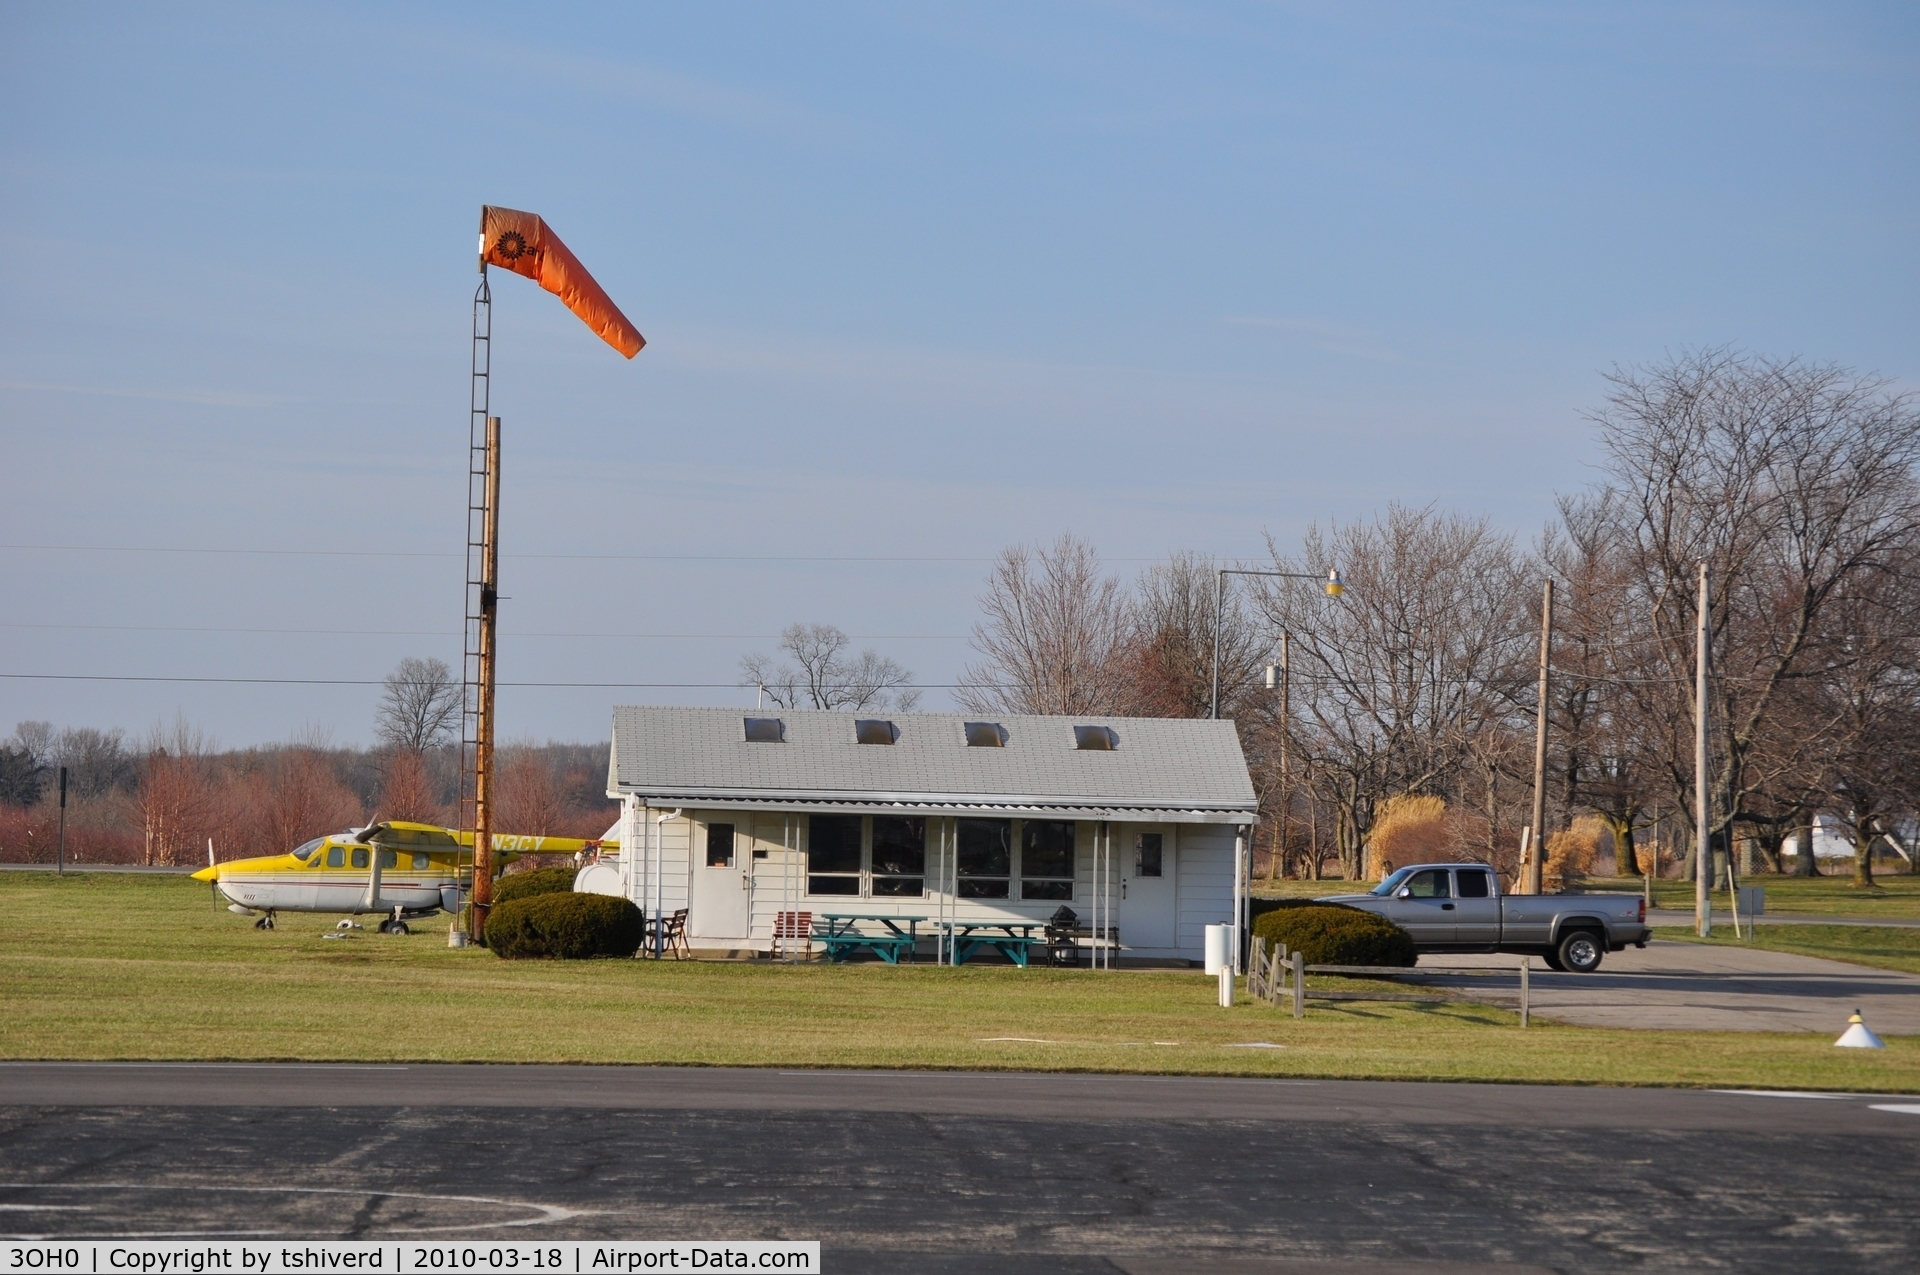 Andy Barnhart Memorial Airport (3OH0) - The Clubhouse and windsock at Andy Barnhart Memorial Airport, New Carlisle, OH USA